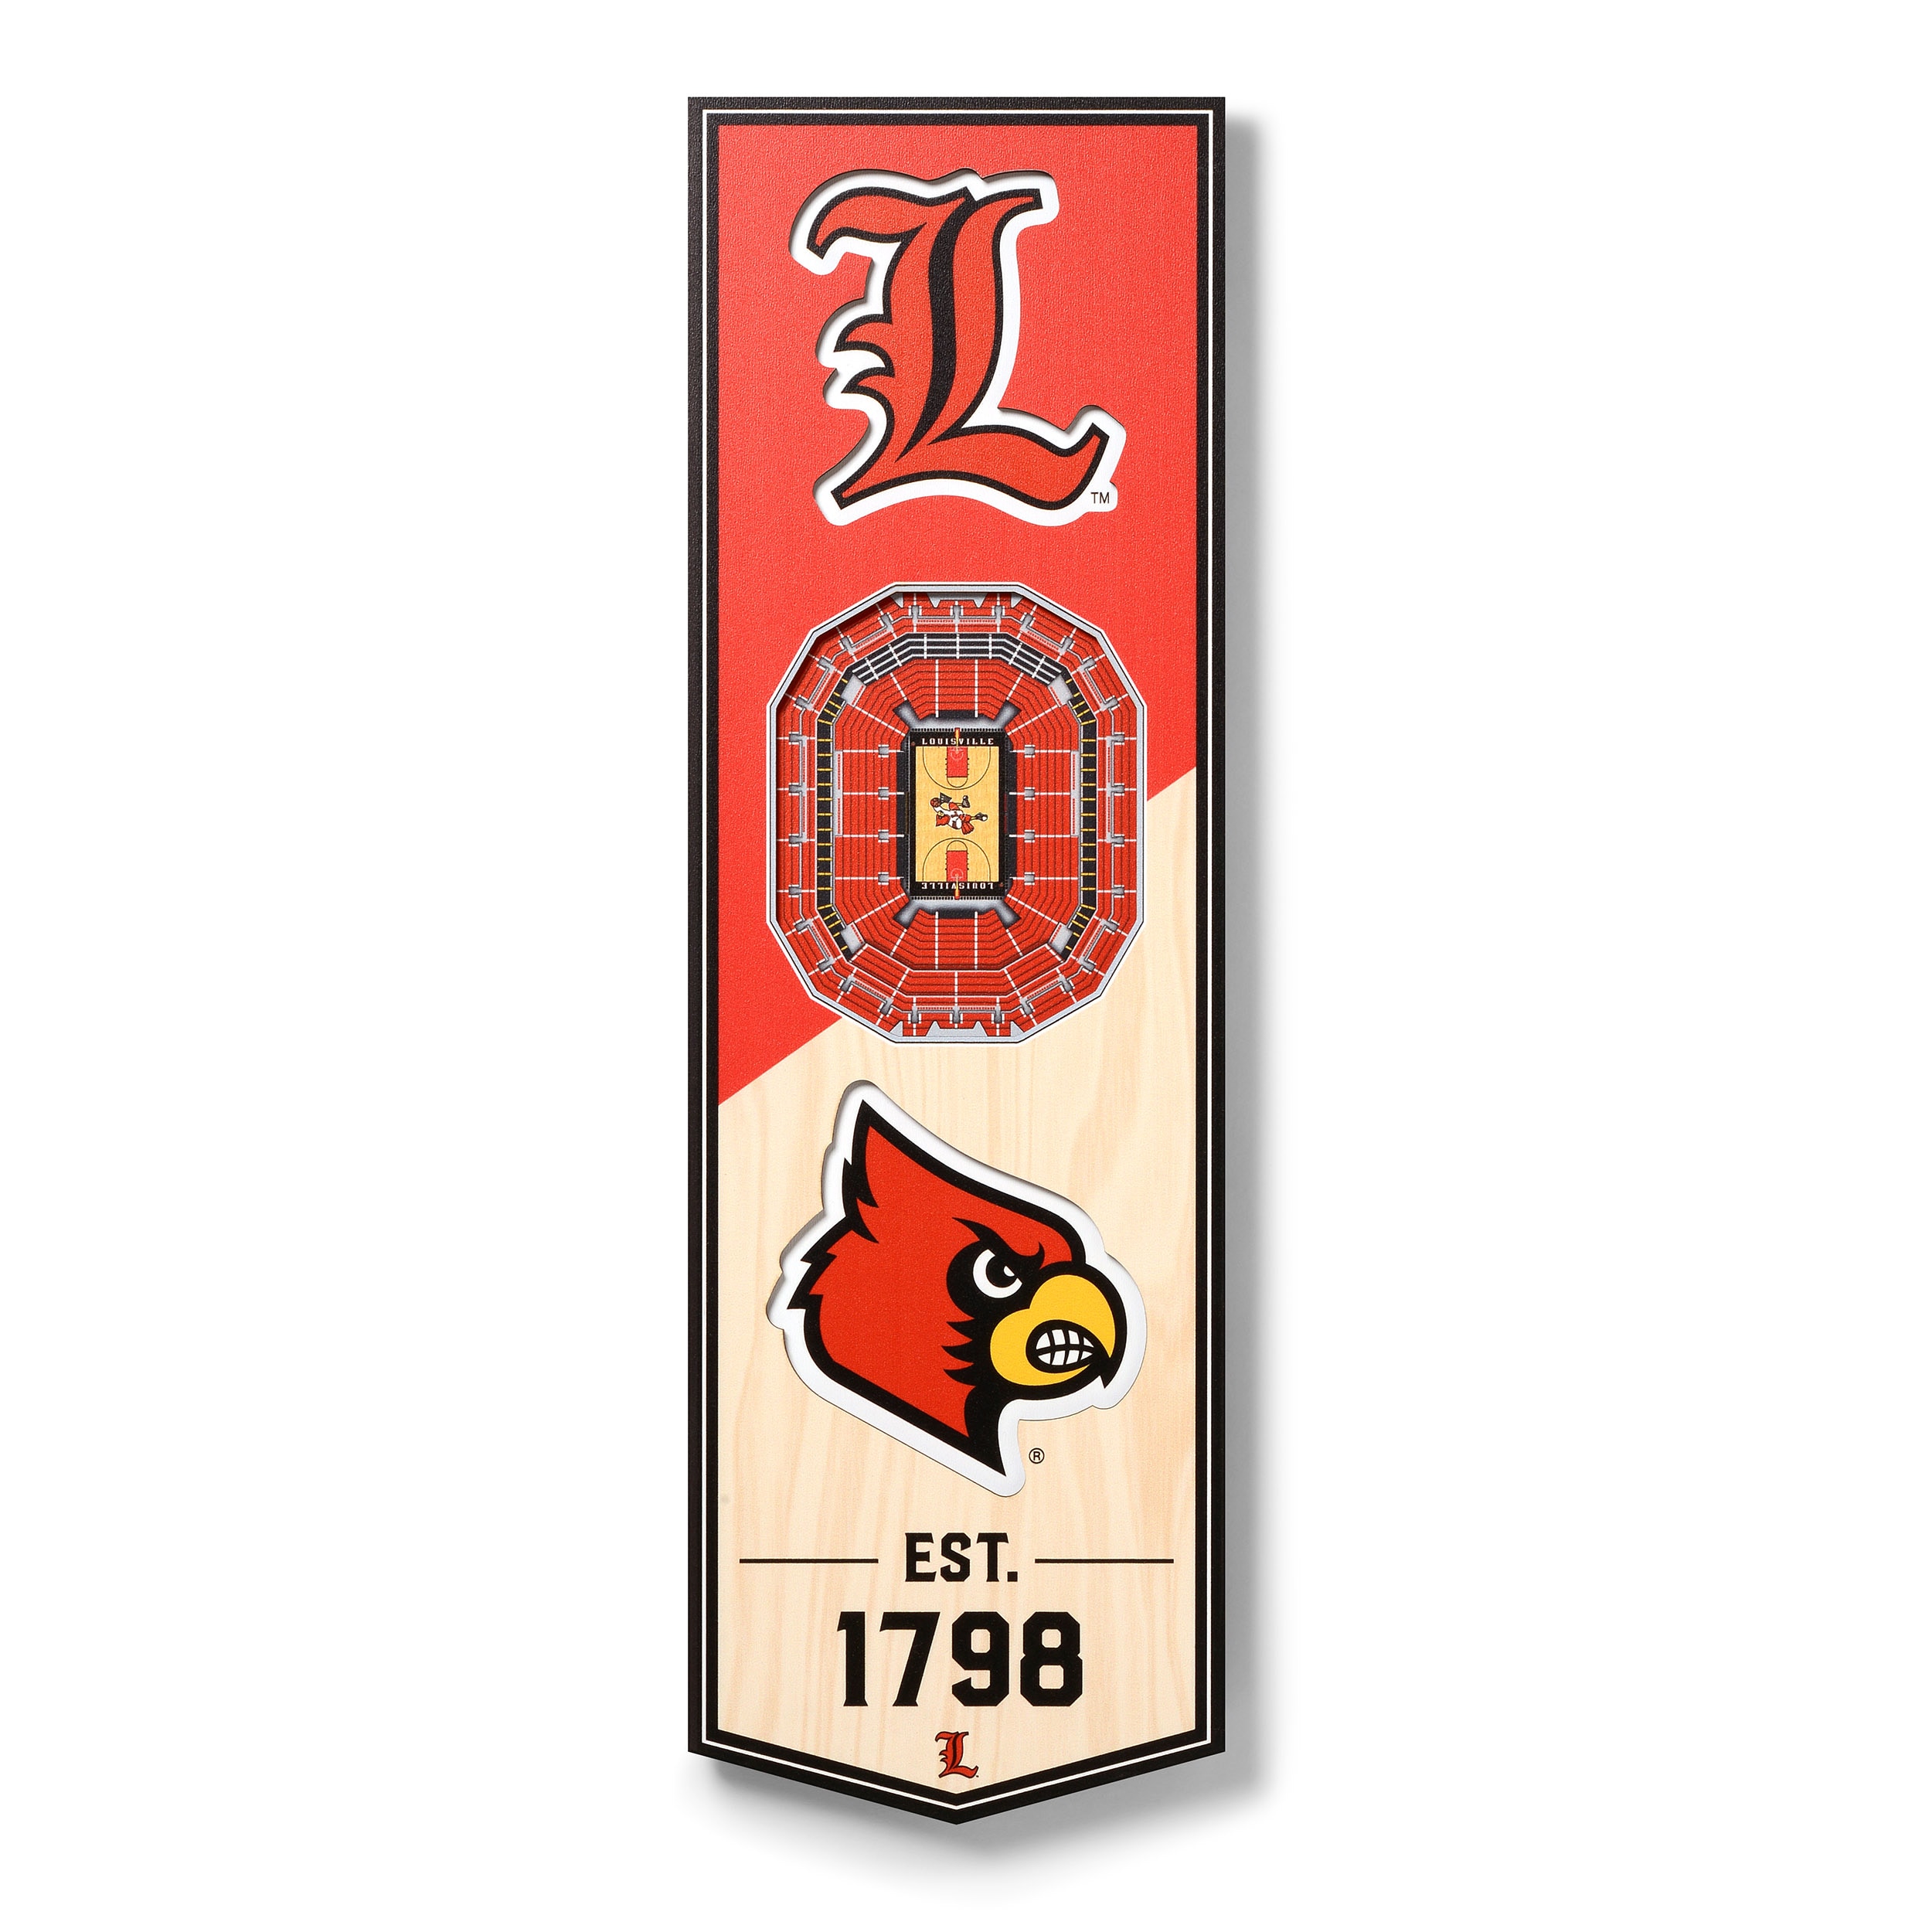 Louisville Cardinals L - Framed Mirrored Wall Sign